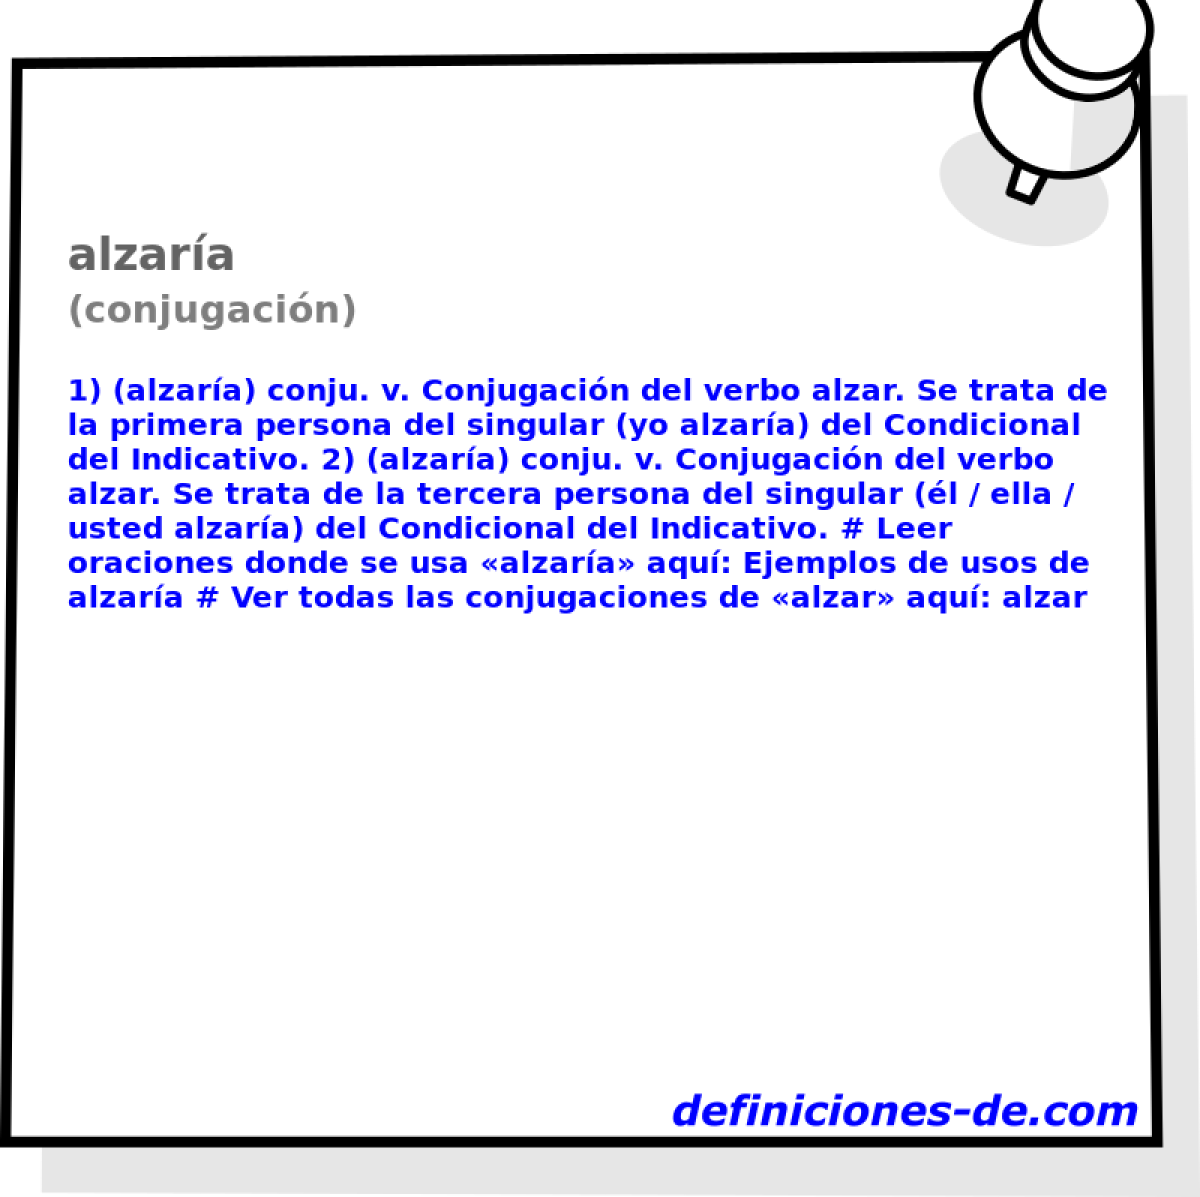 alzara (conjugacin)